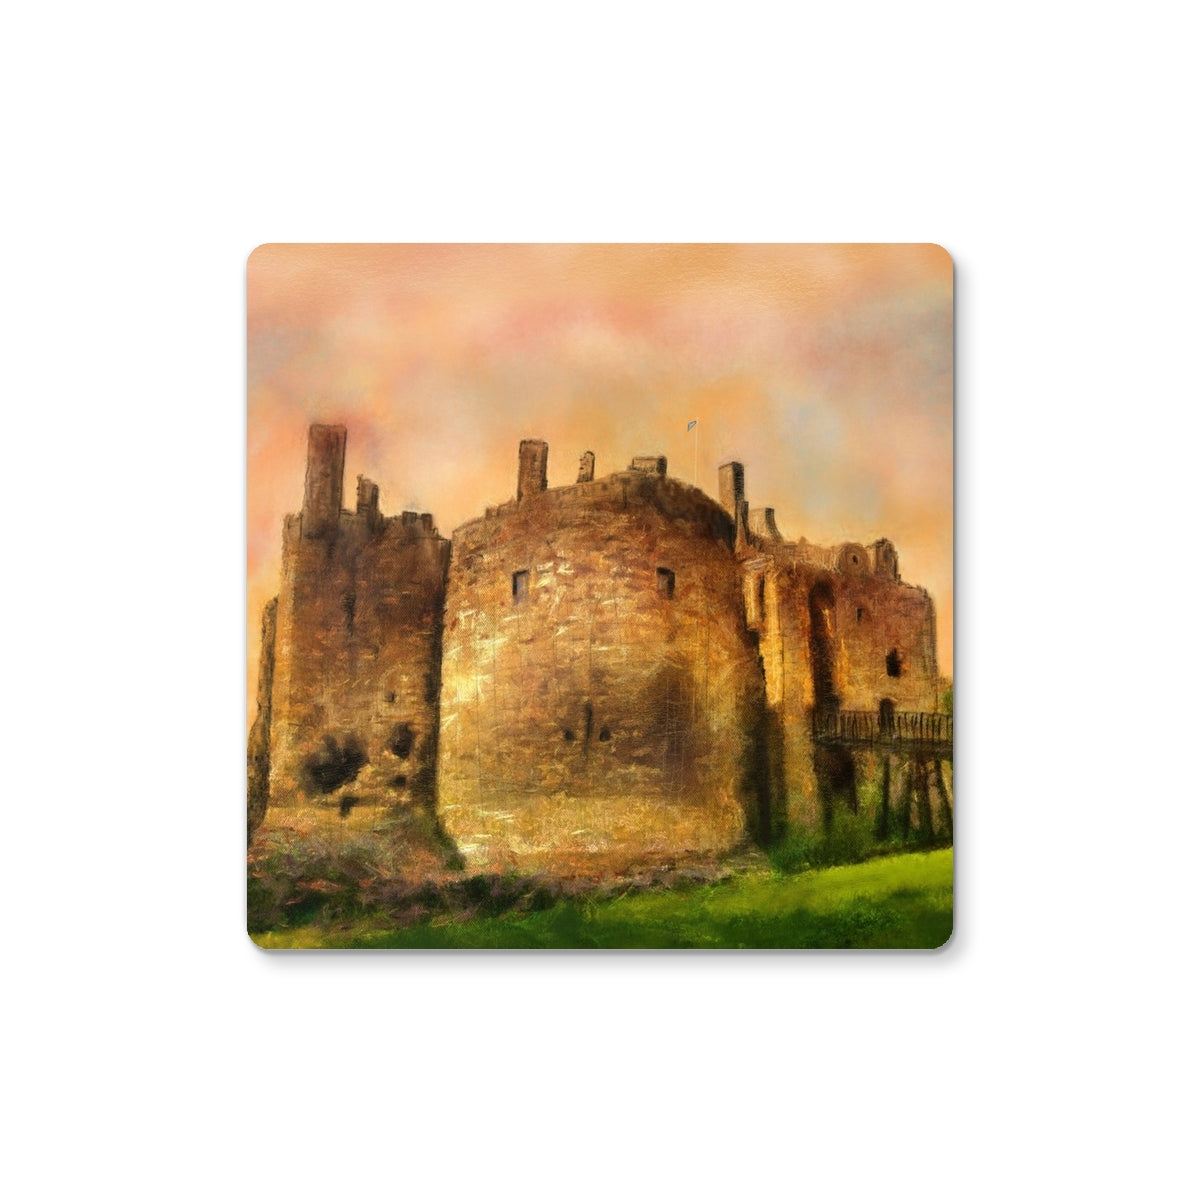 Dirleton Castle Art Gifts Coaster-Homeware-Prodigi-Single Coaster-Paintings, Prints, Homeware, Art Gifts From Scotland By Scottish Artist Kevin Hunter